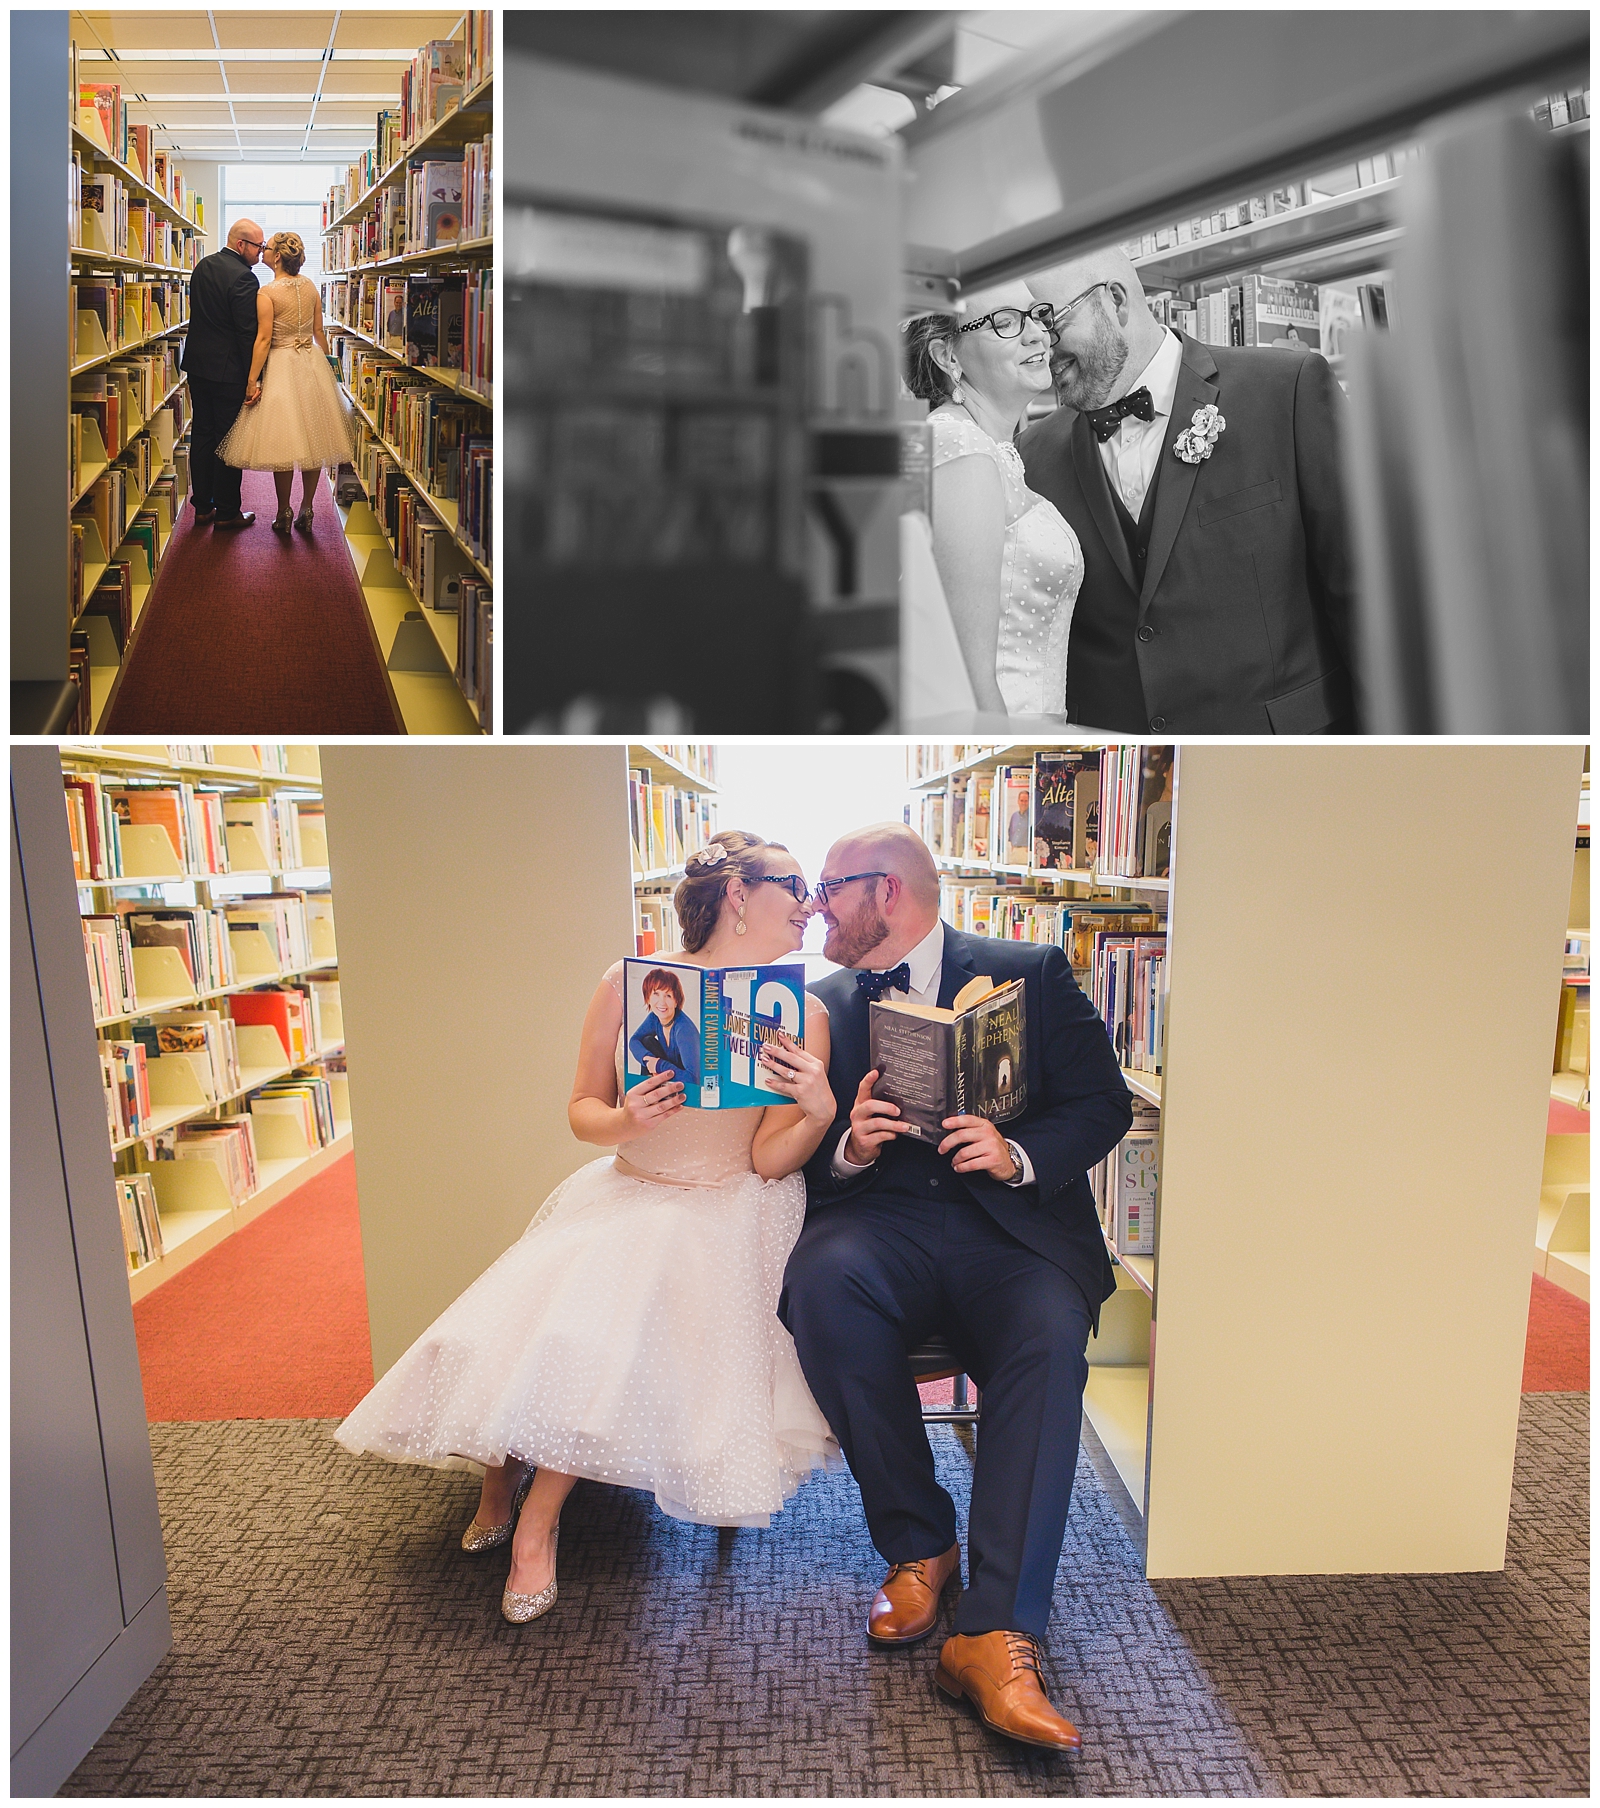 Wedding photography at the Kansas City Public Library by Kansas City wedding photographers Wisdom-Watson Weddings.